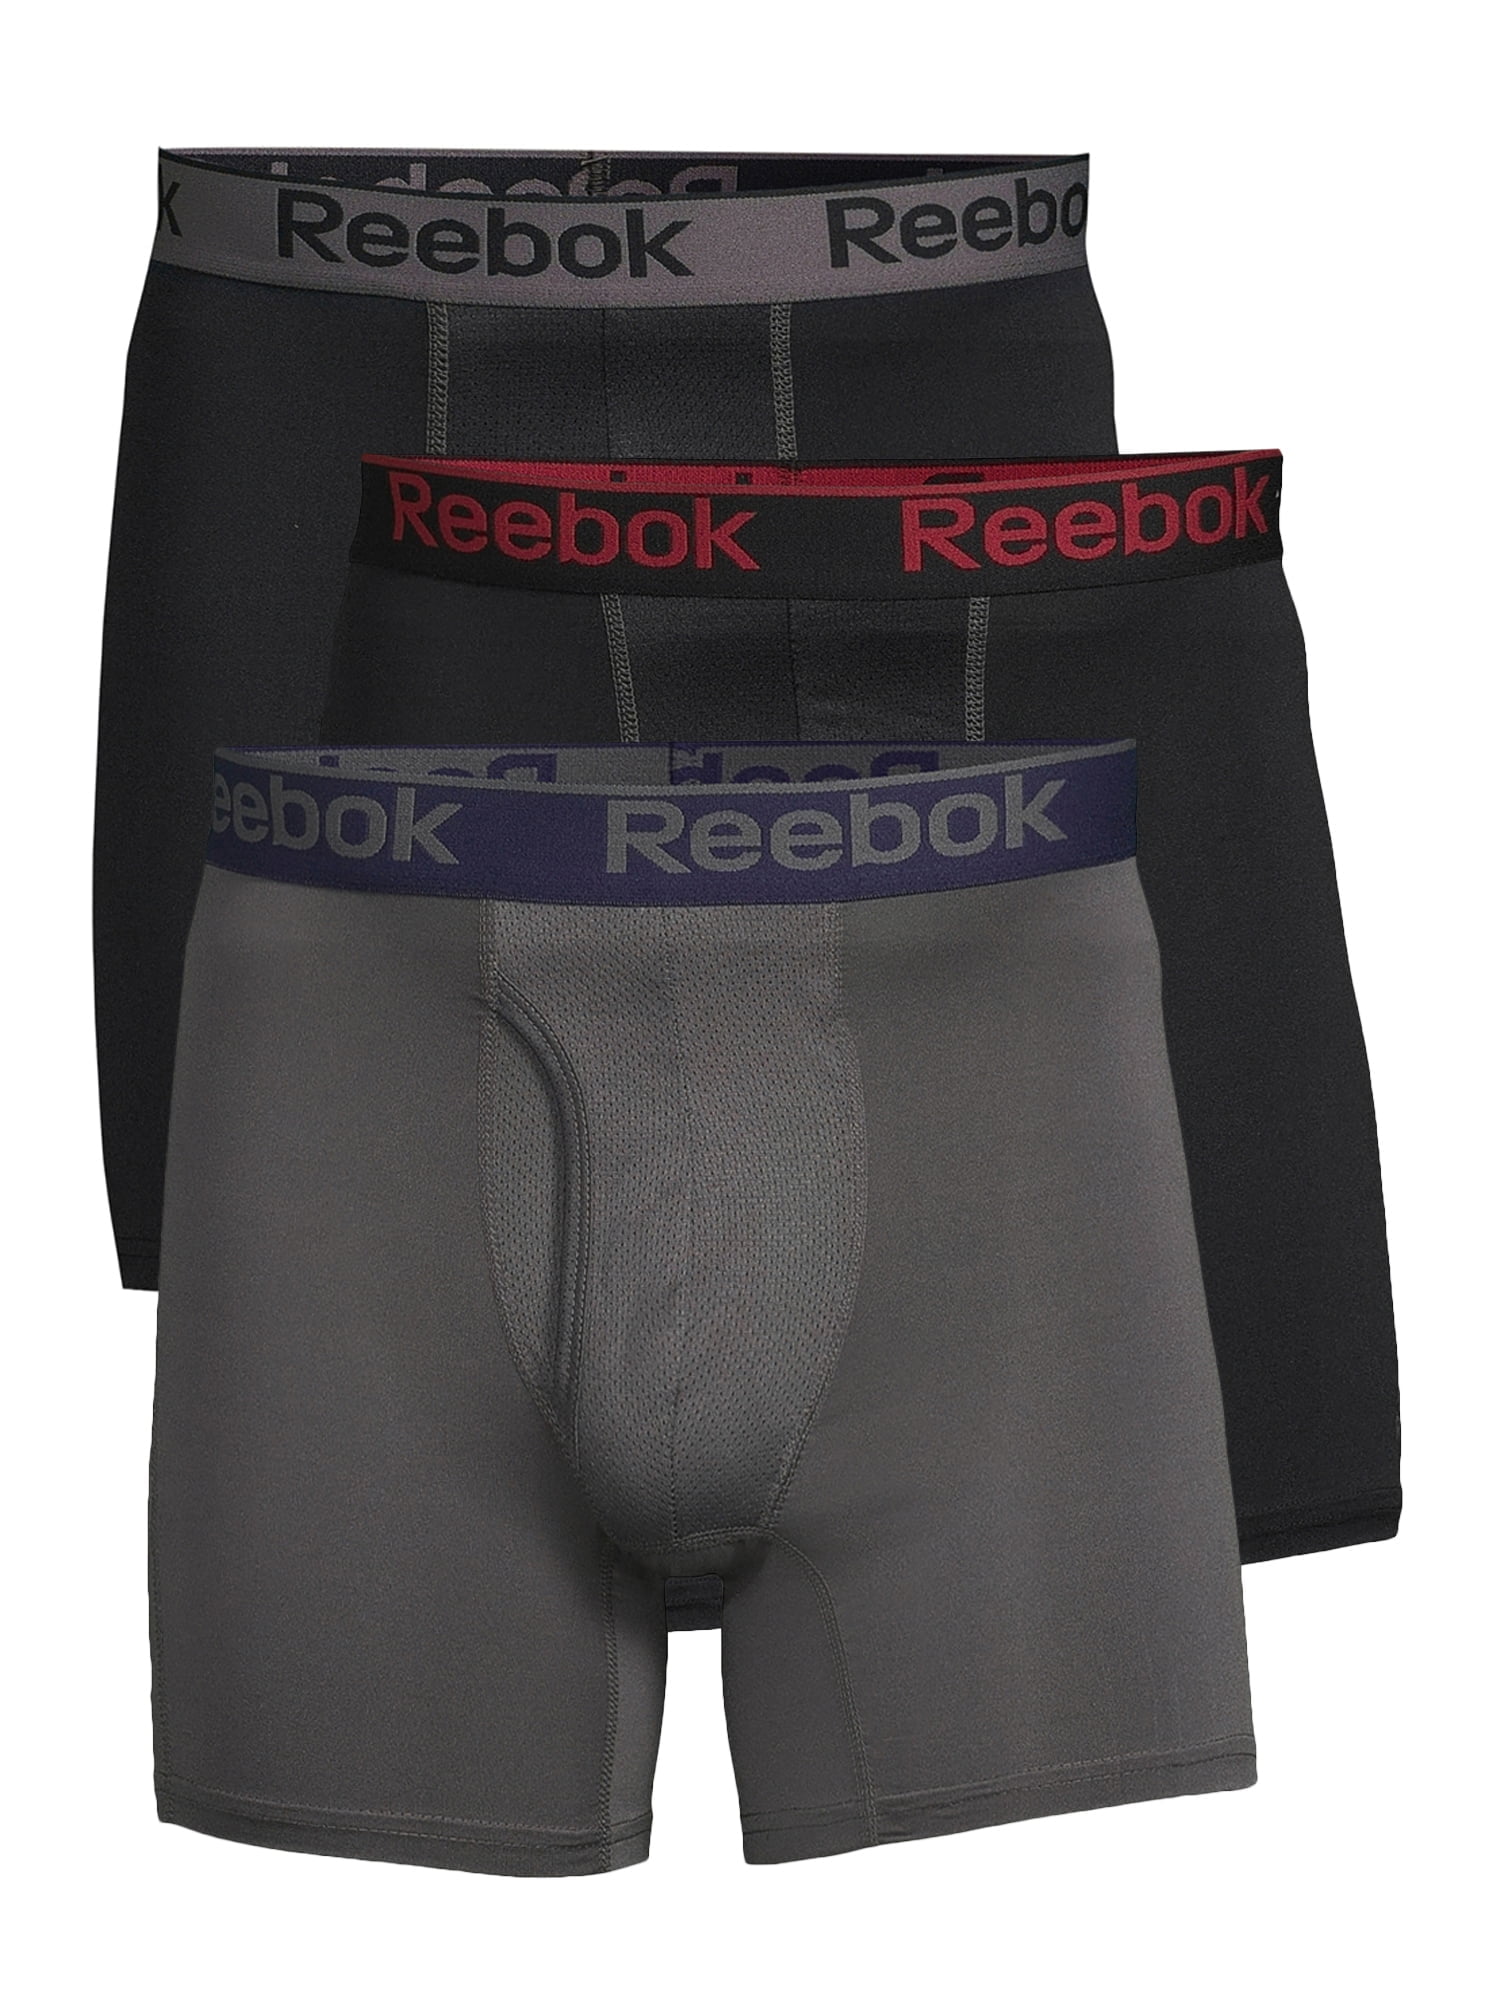 Reebok Men's Pro Series Performance Long Leg Boxer Brief, 7.5-Inch